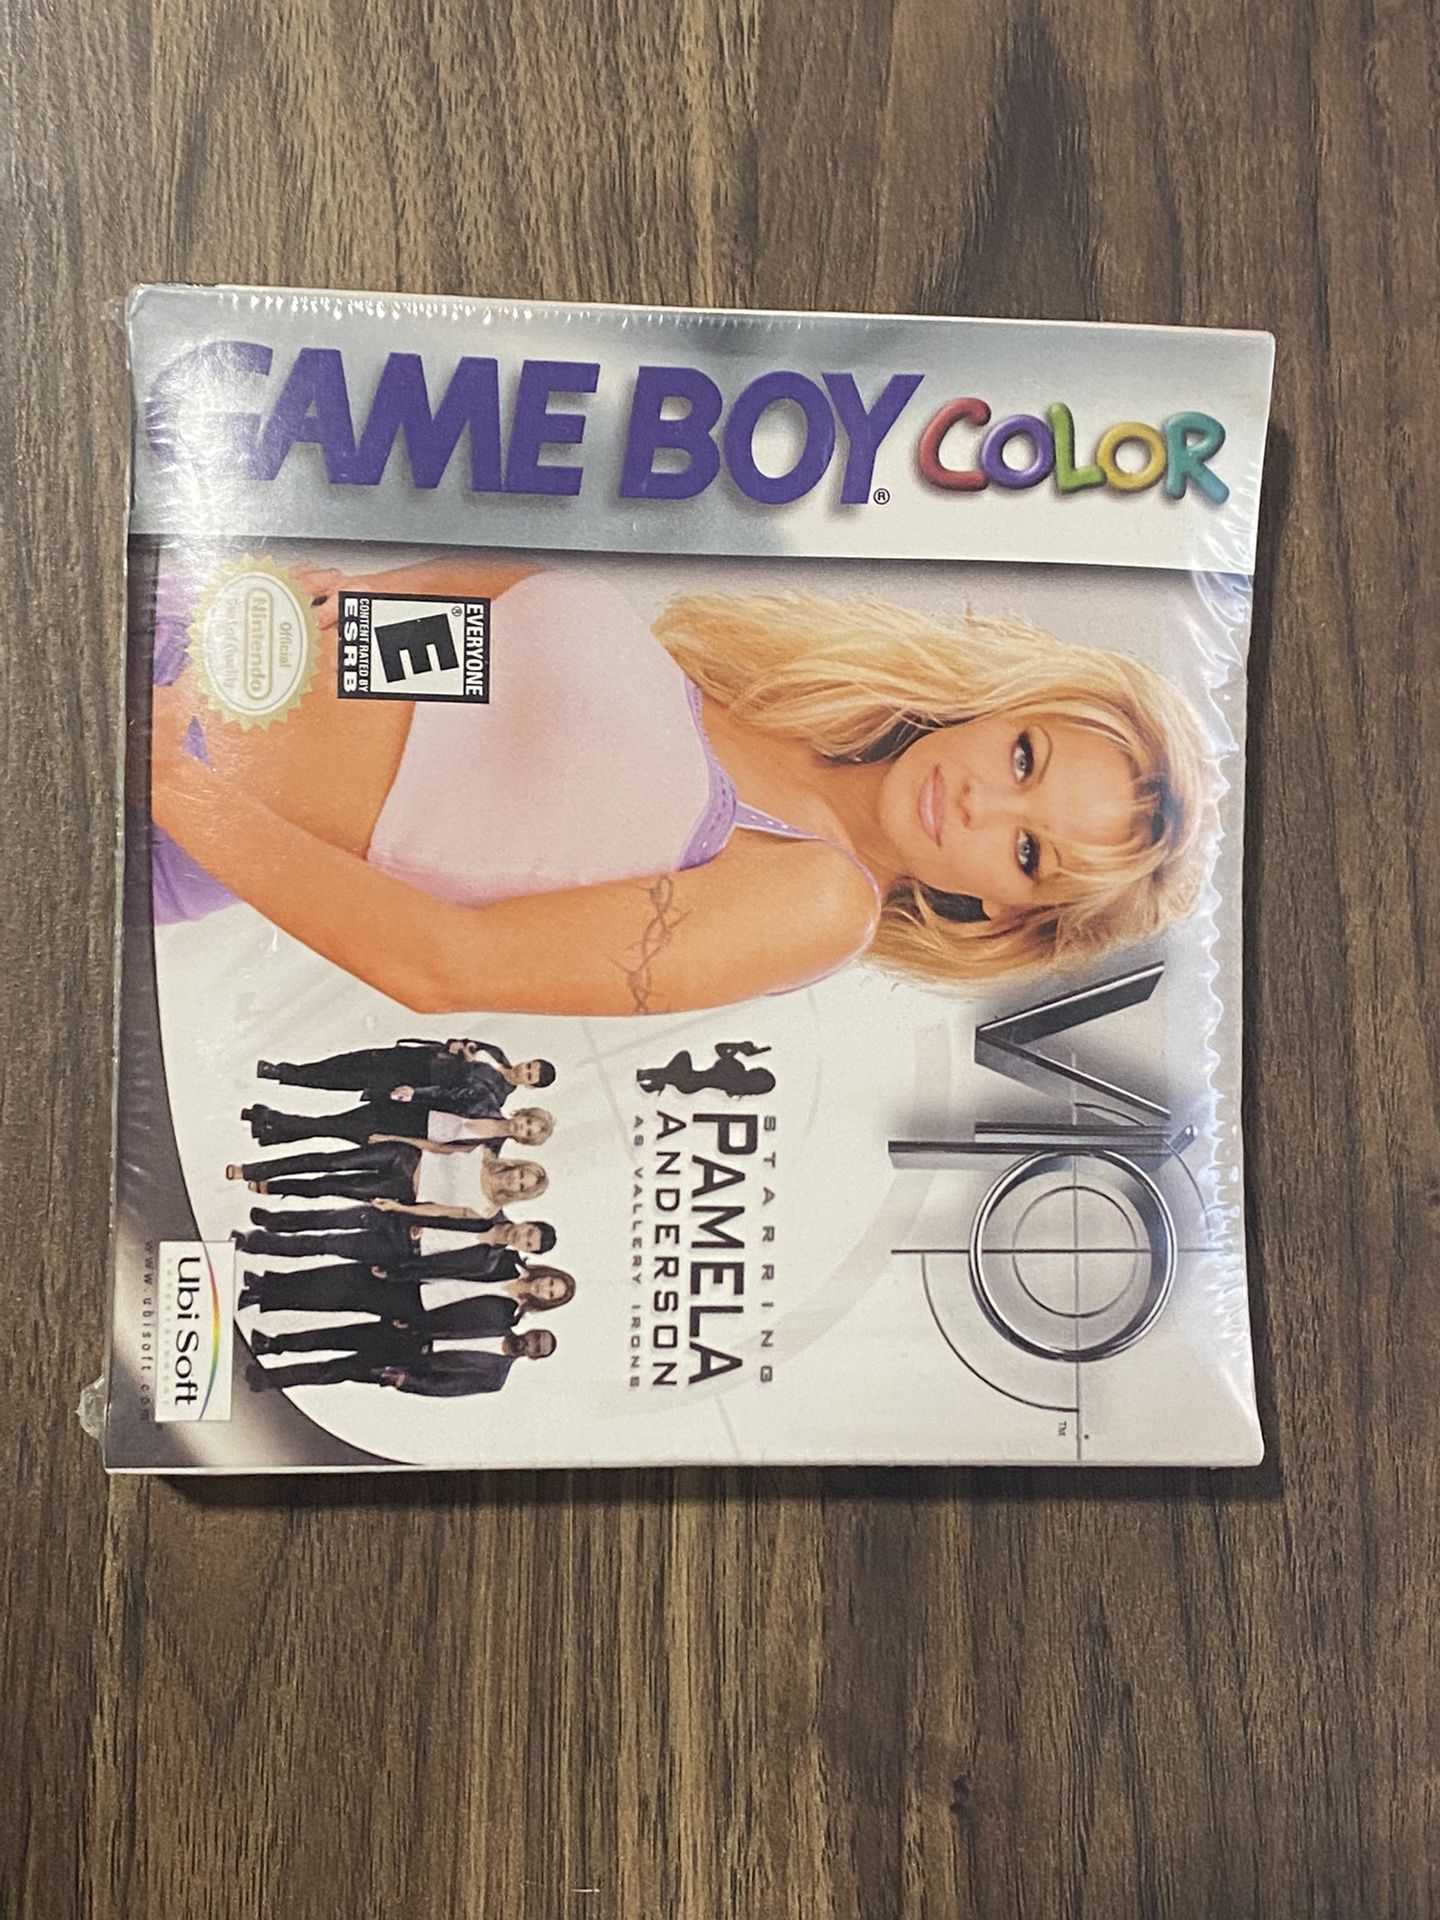 Factory Sealed Game Boy Color Game: Pamela Anderson VIP